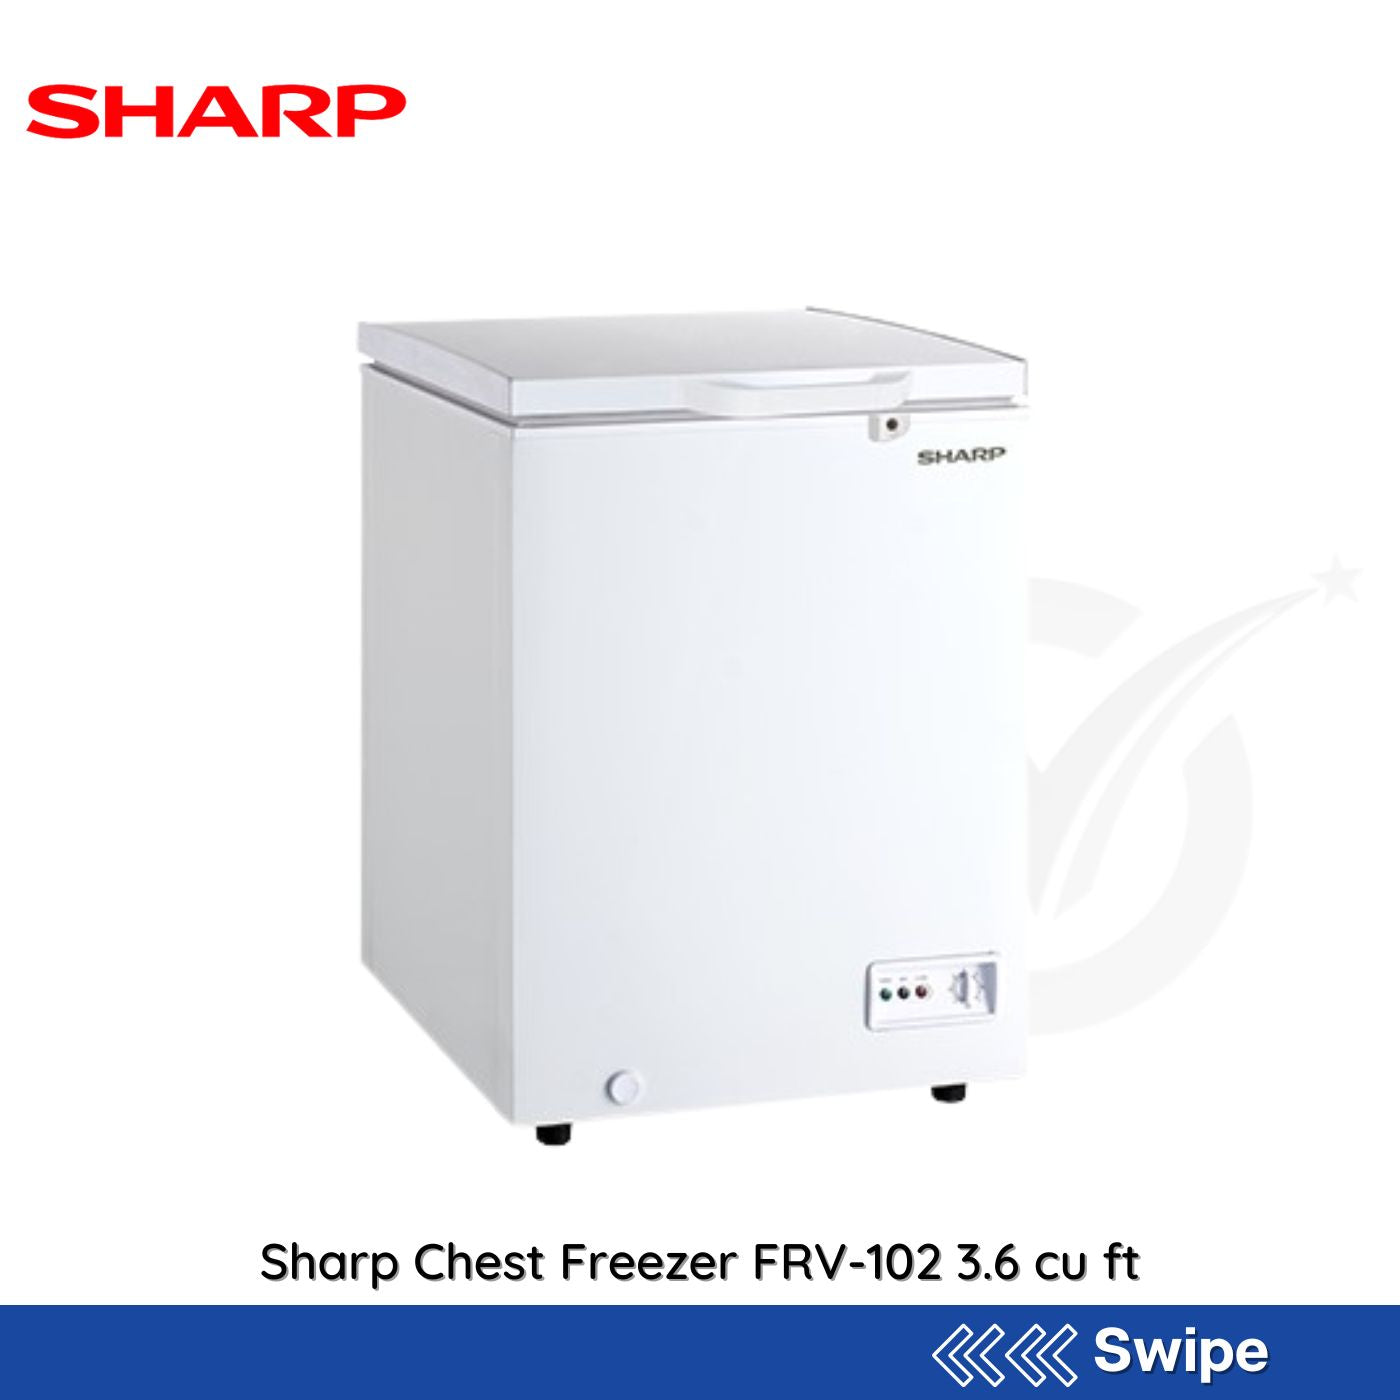 Sharp Chest Freezer FRV-102 3.6 cu ft - People's Choice Marketing